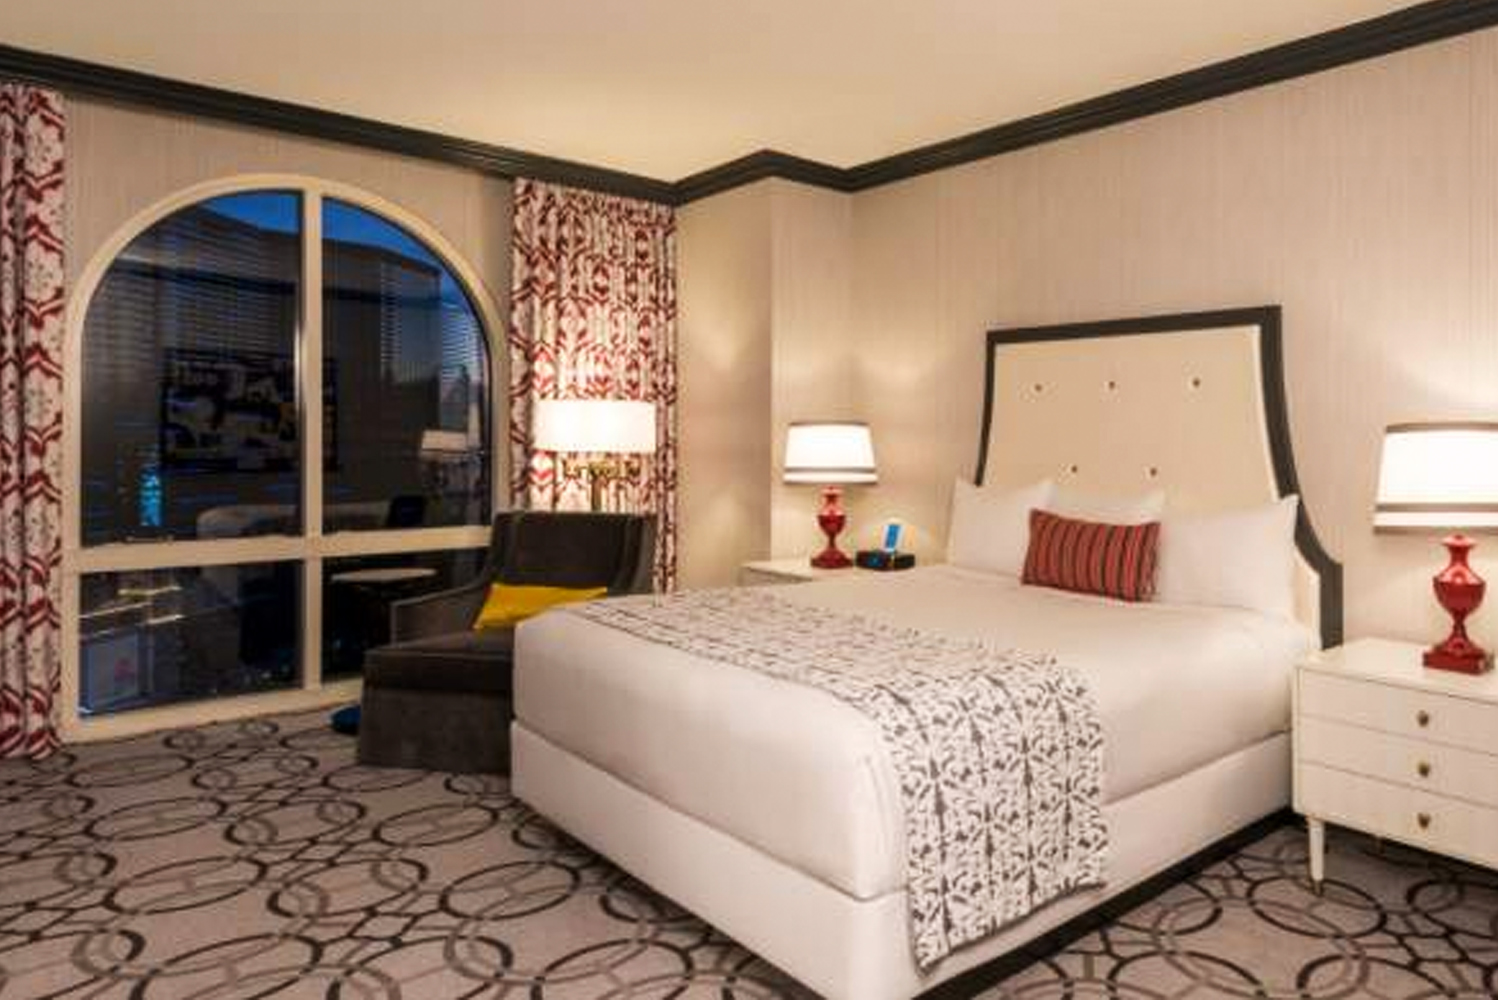 Paris Las Vegas redesigns 2,900 rooms, launches new Voie Spa